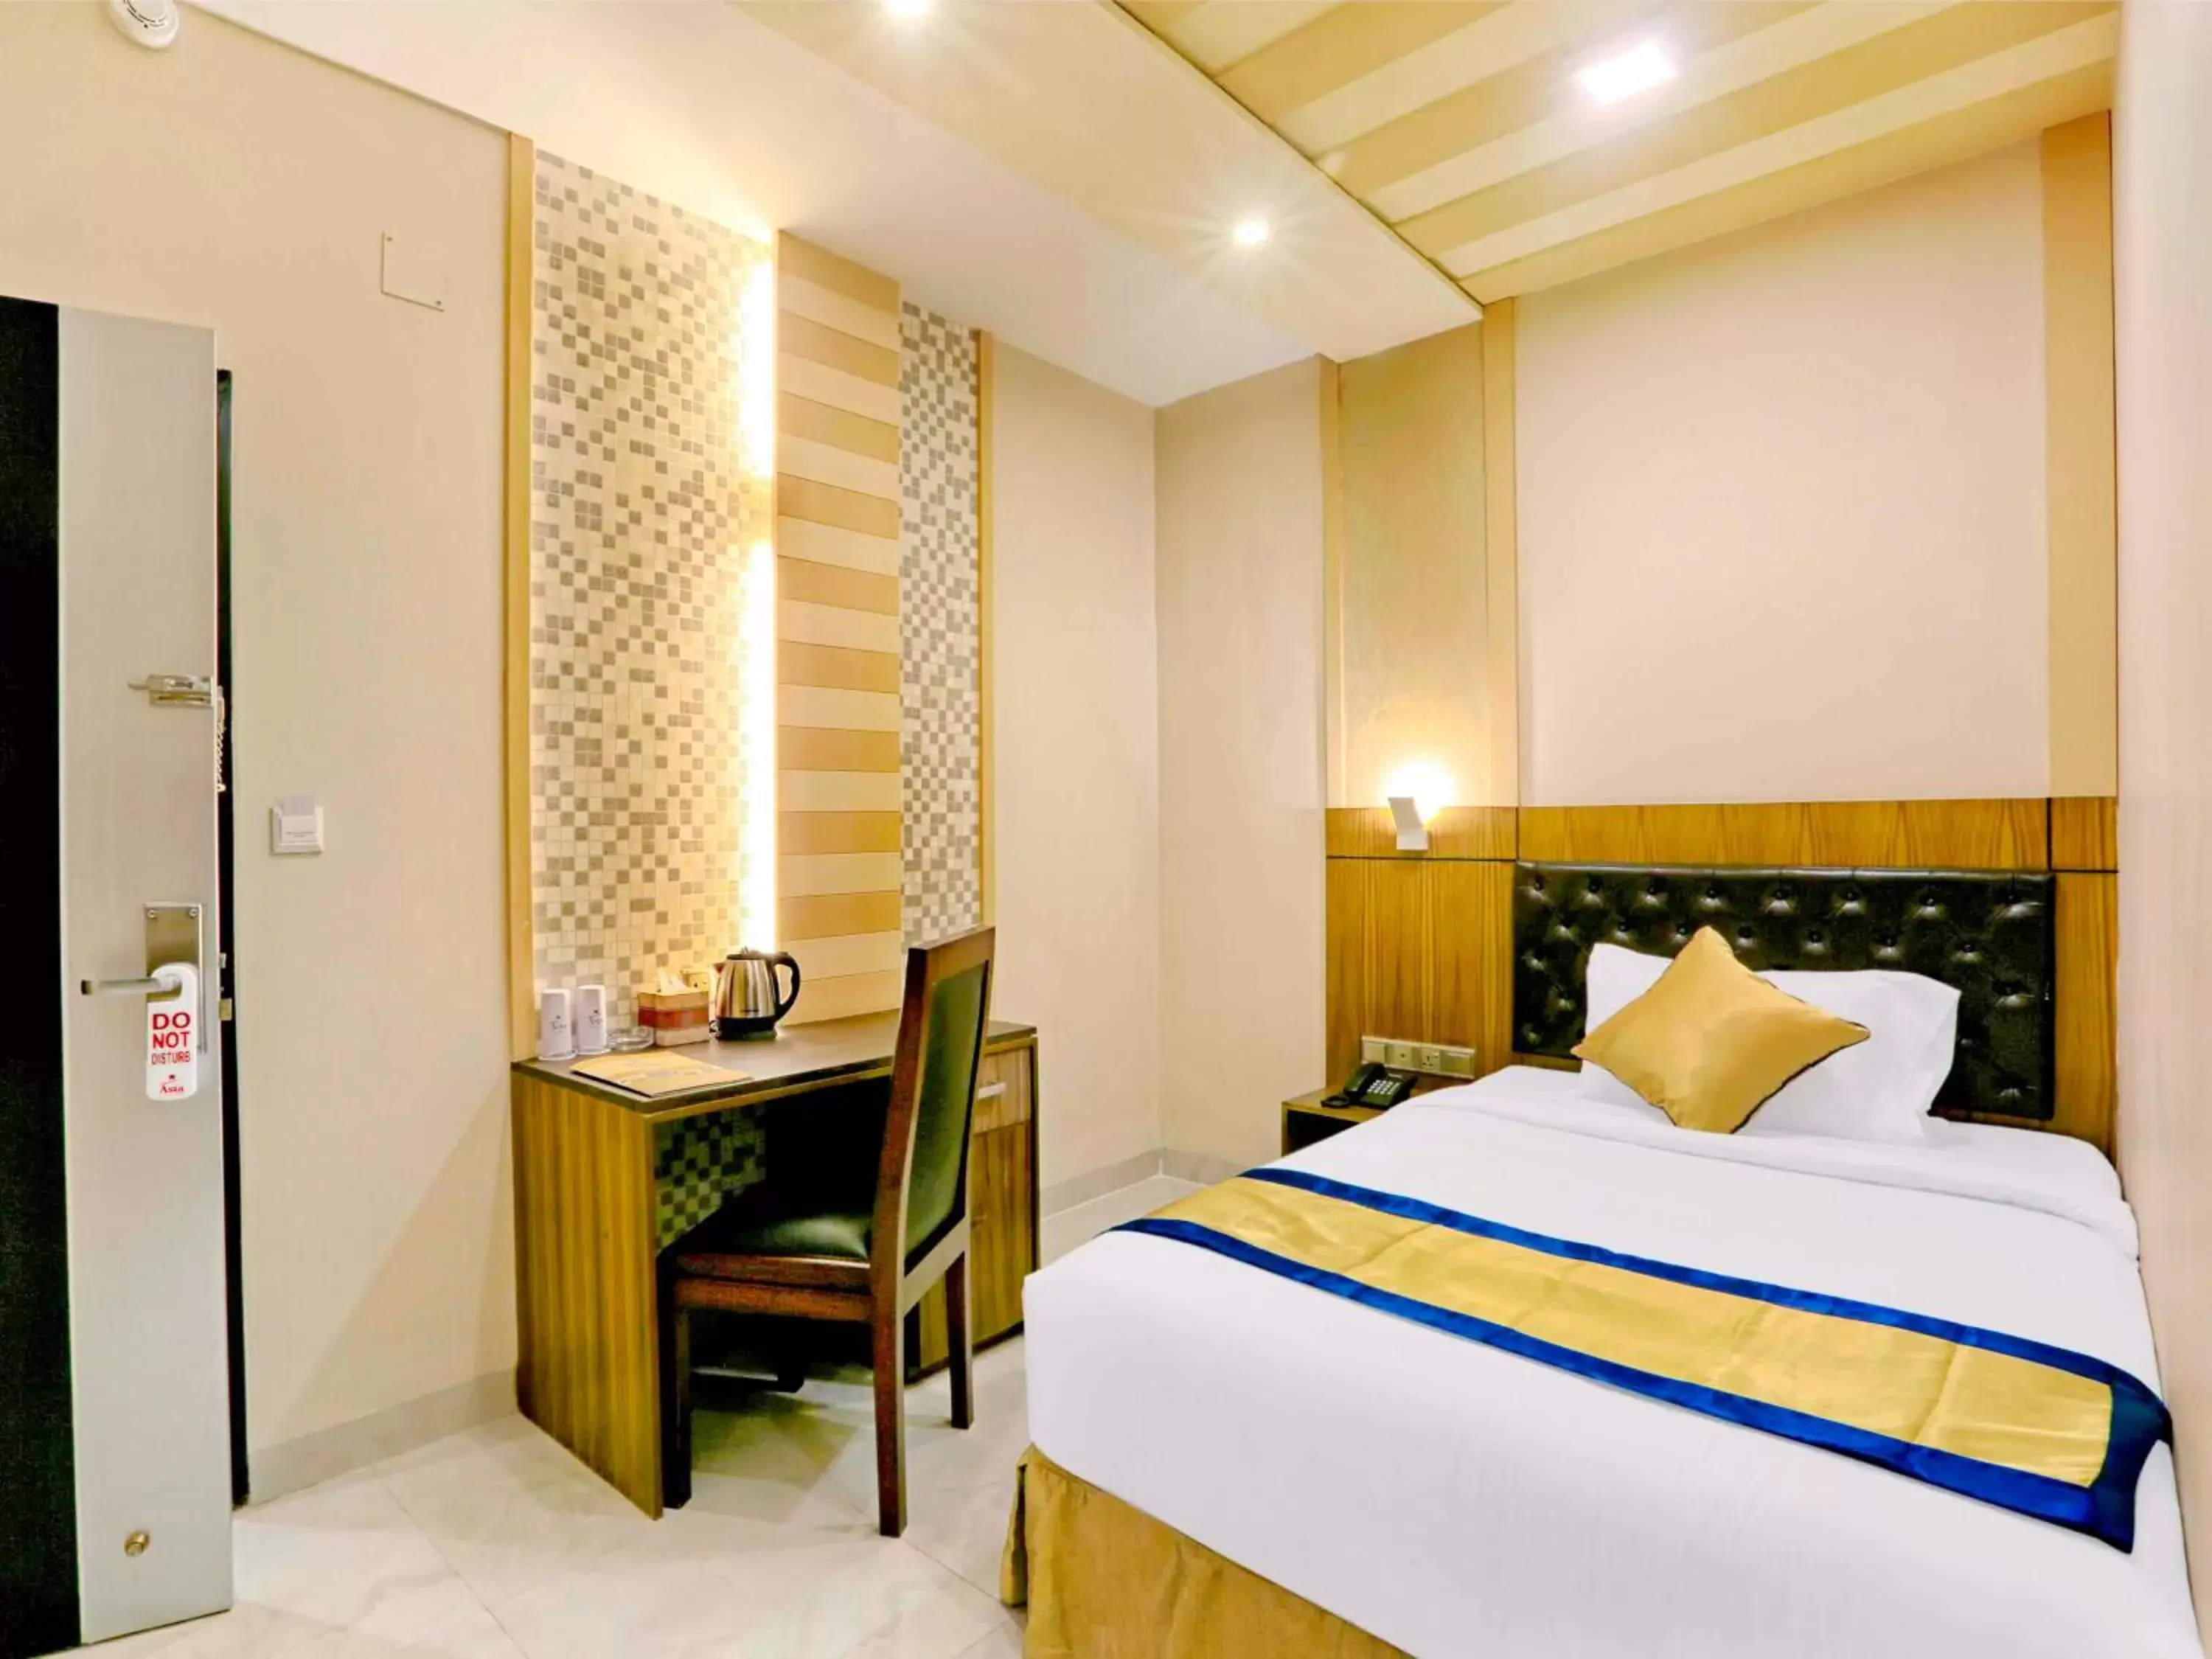 Bedroom, Bed in Asia Hotel & Resorts